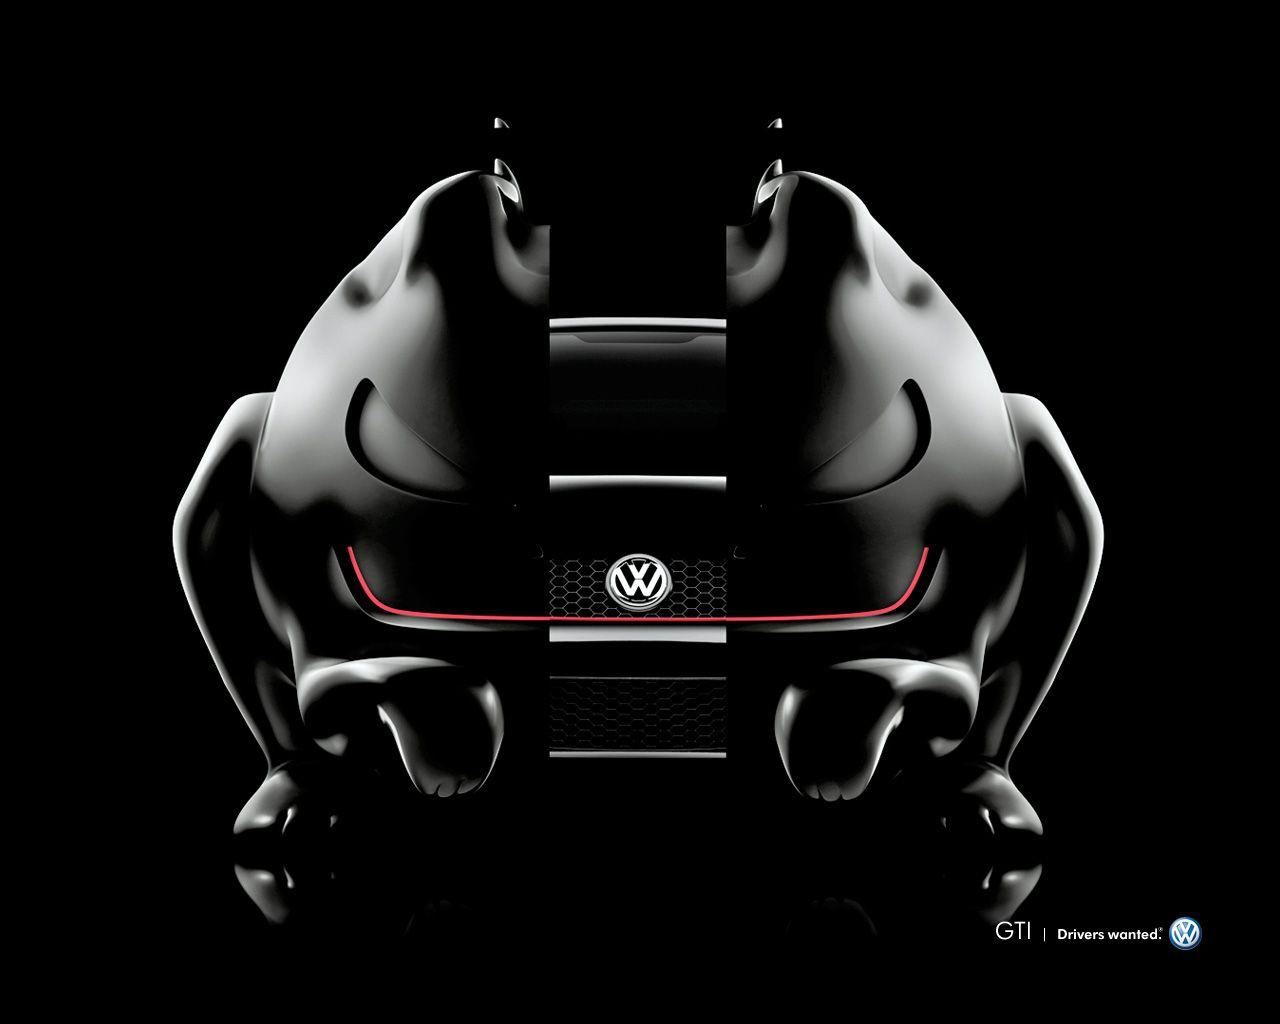 cool img max: Hot cars: VW das auto Volkswagen logo image volkswagen